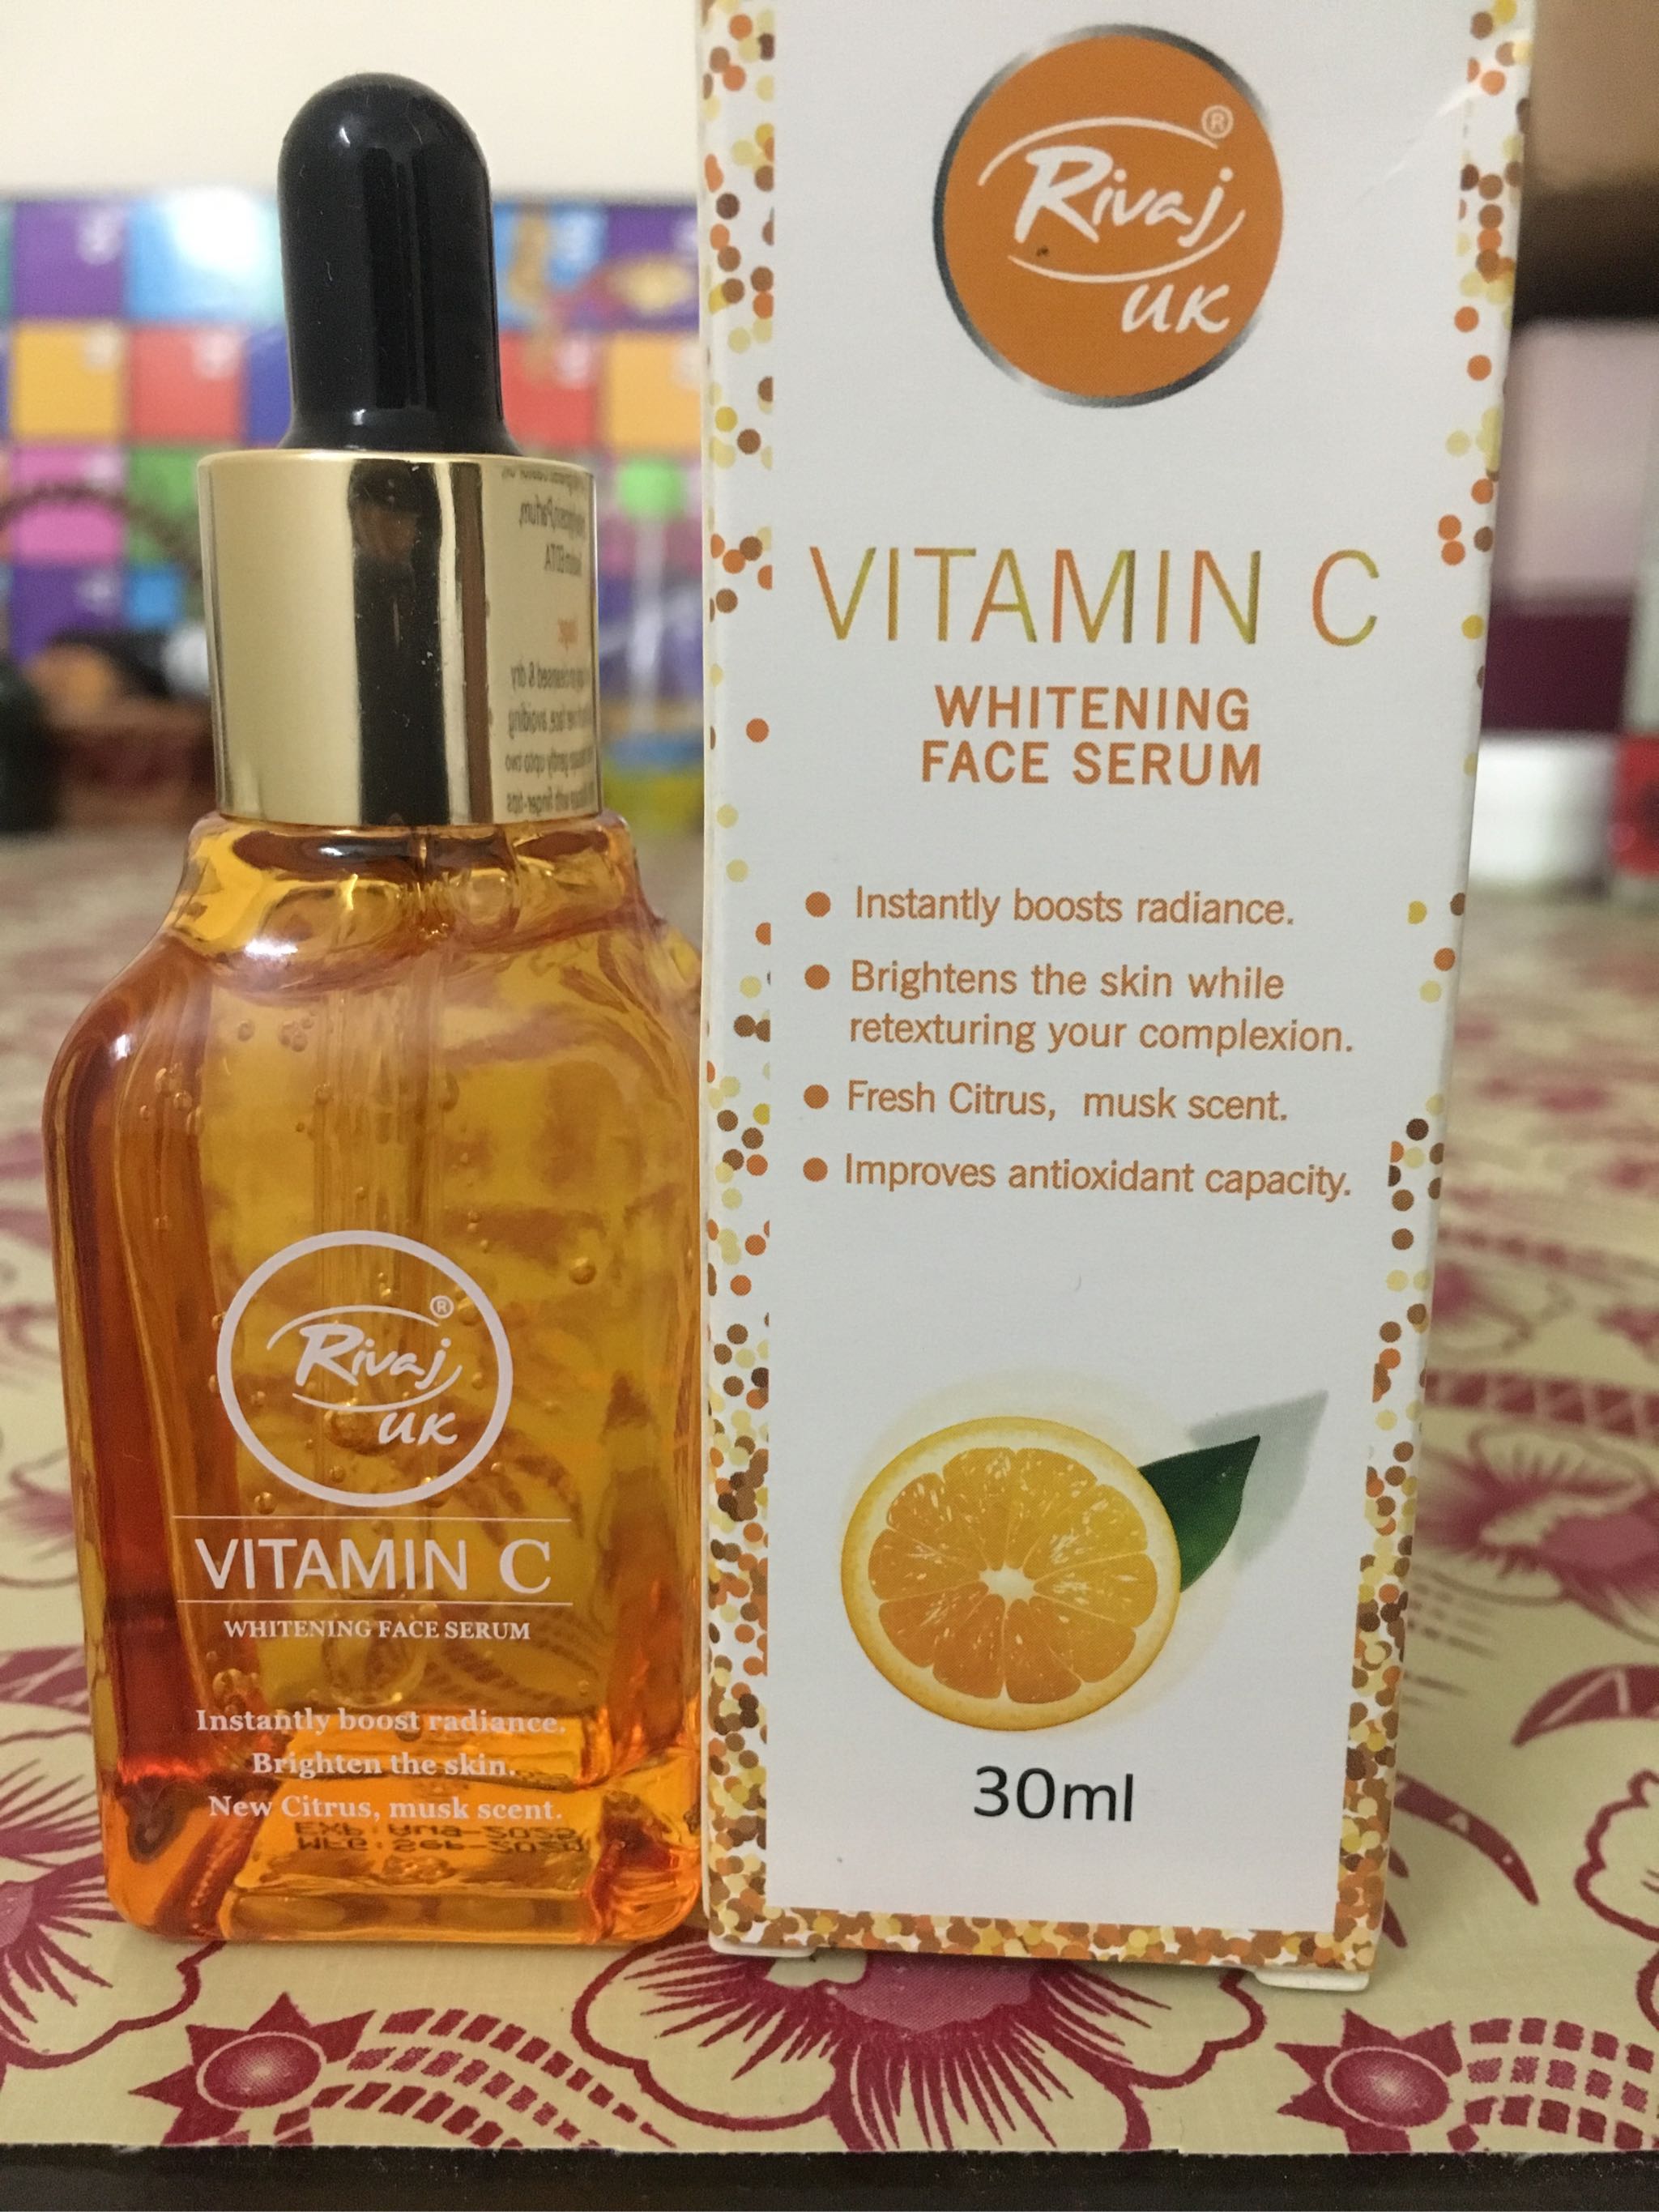 Rivaj Uk Vitamin C Face Serum Buy Online At Best Prices In Pakistan Daraz Pk